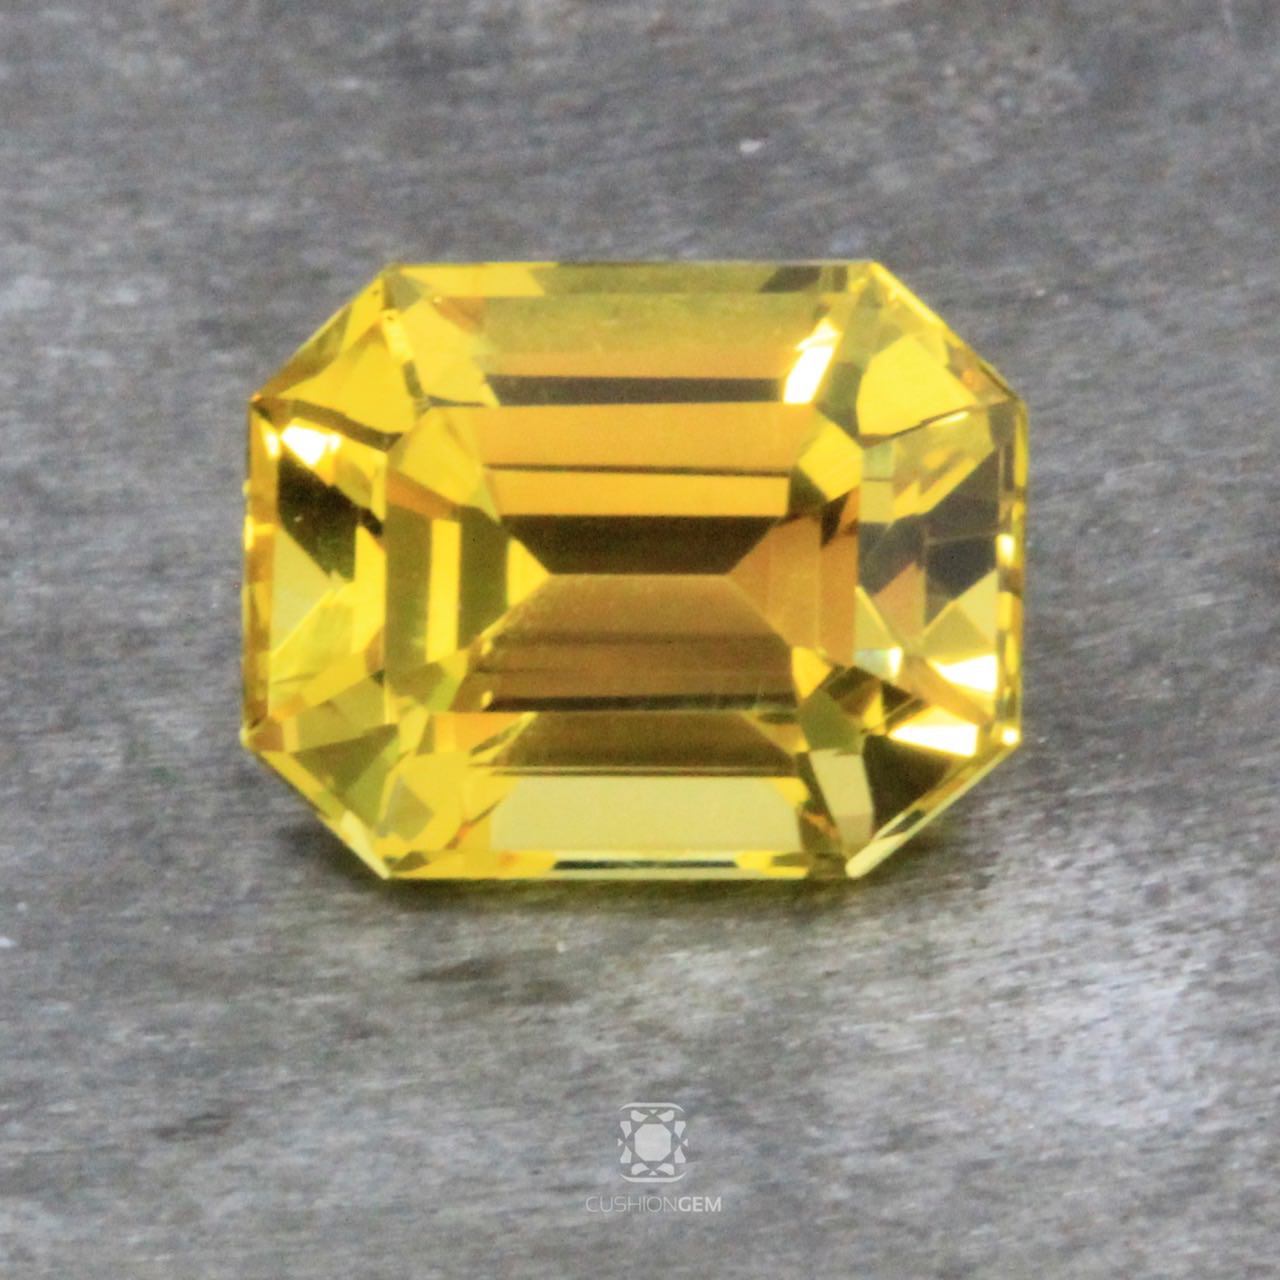 7.02 Emerald Cut Un-heated Yellow Sapphire